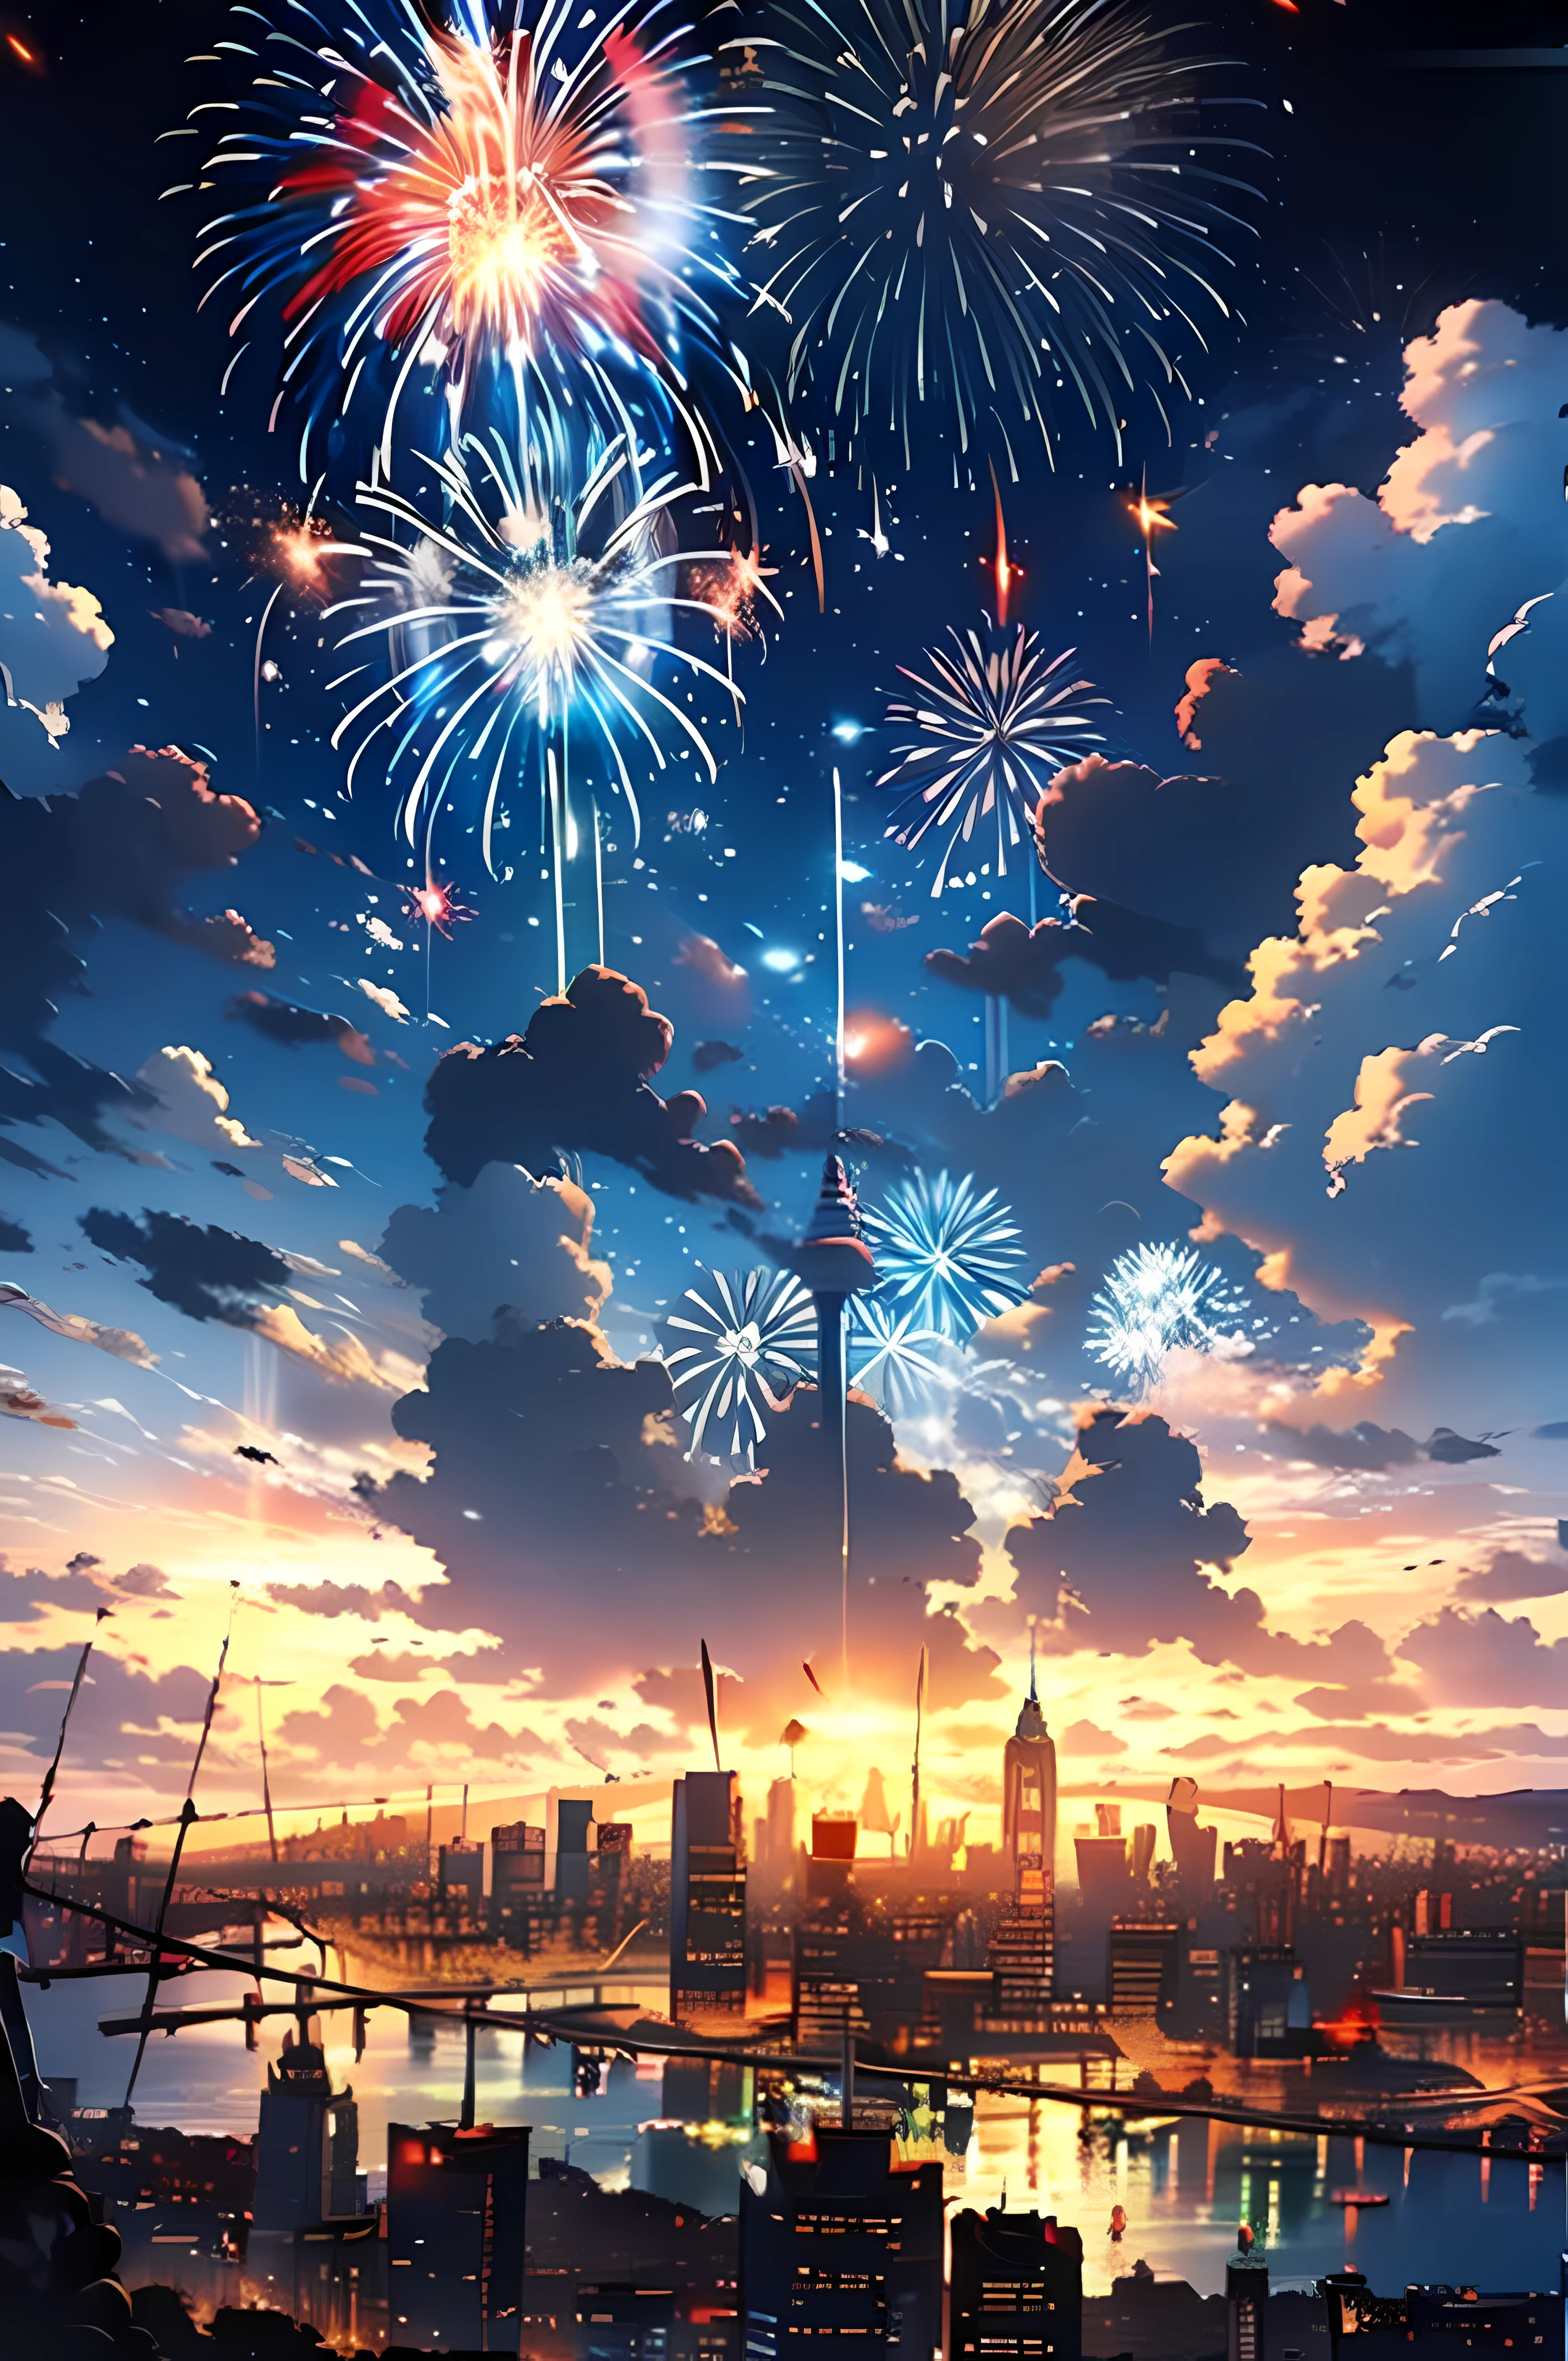 Skysky, fire works, NOhumans, scenecy, ​​clouds, exteriors, natta, cloud sky, inverted image, nigh sky, stele（Skysky）, Eau, the sunset, horizon, starrysky, the ocean,mutiple fireworks,Grand fireworks,Spectacular fireworks display. The fireworks are huge